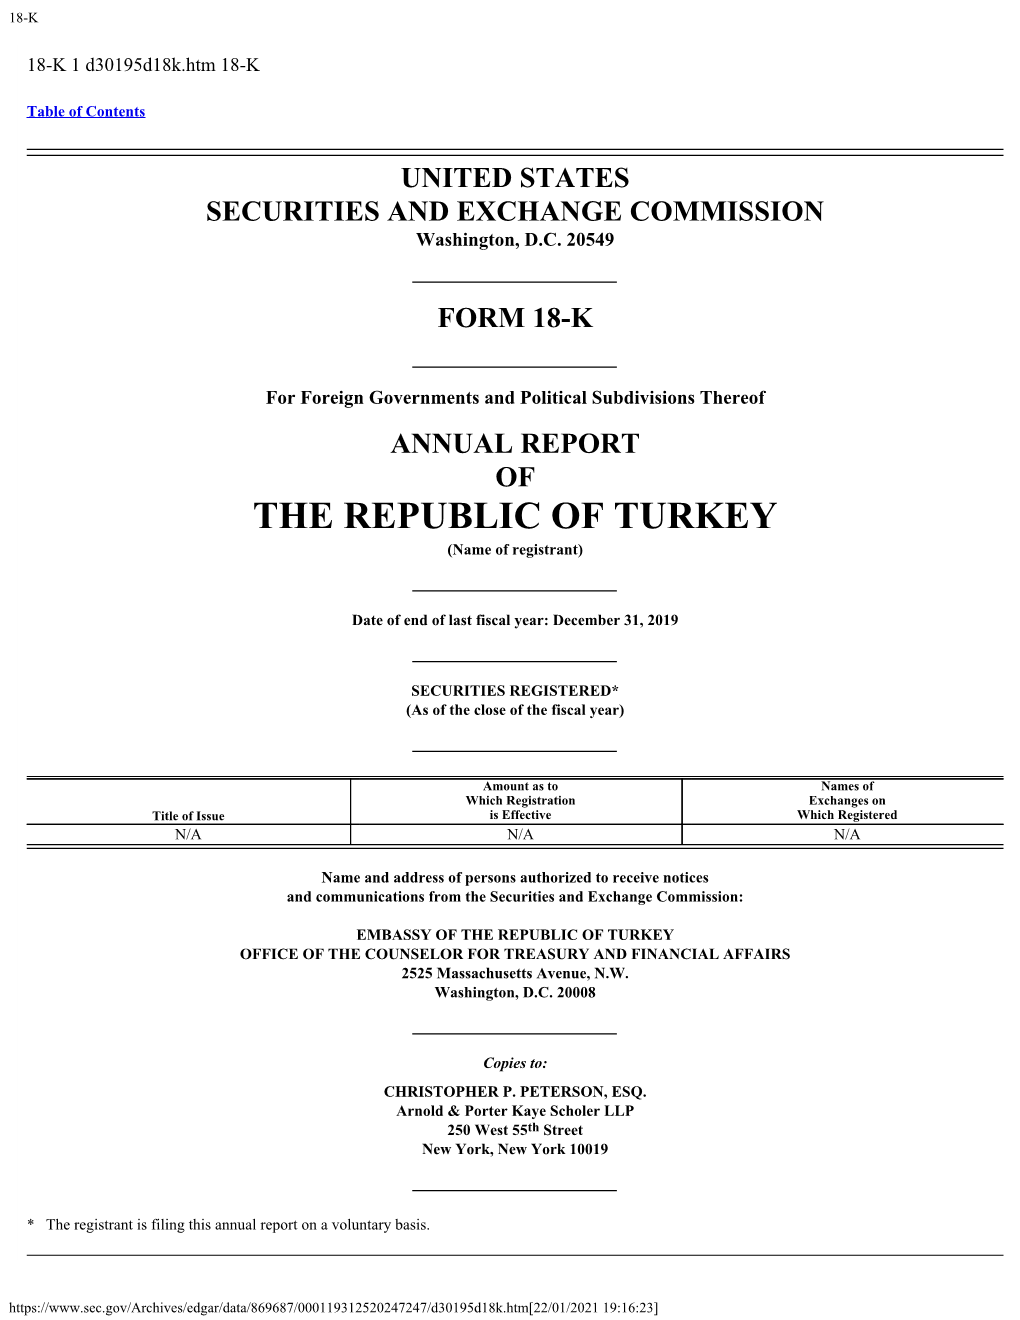 REPUBLIC of TURKEY (Name of Registrant)